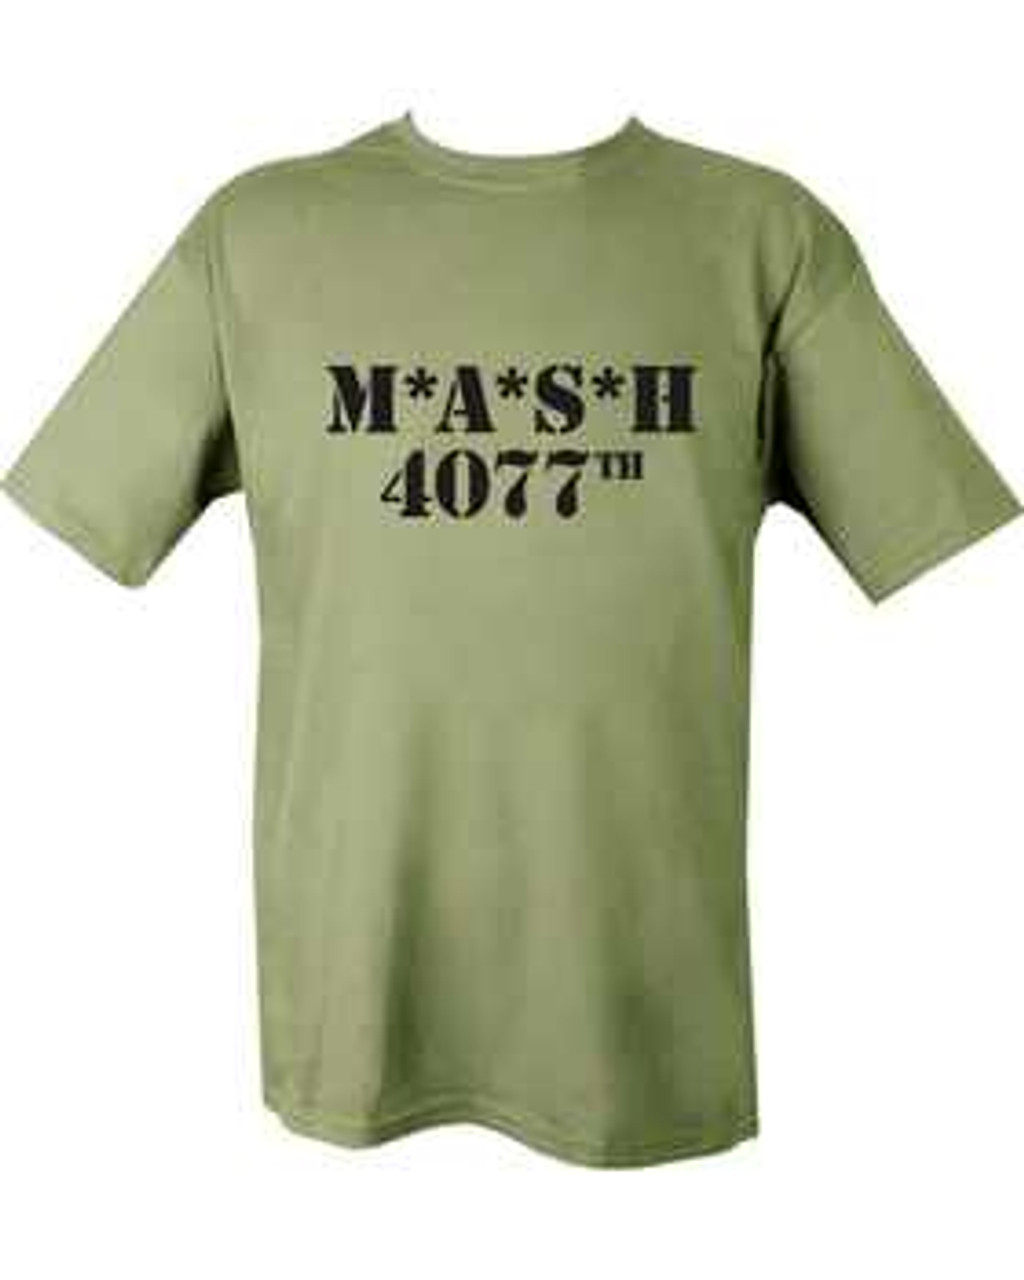 Military Printed MASH 4077th T Shirt Olive Green - MilitaryOps Ltd